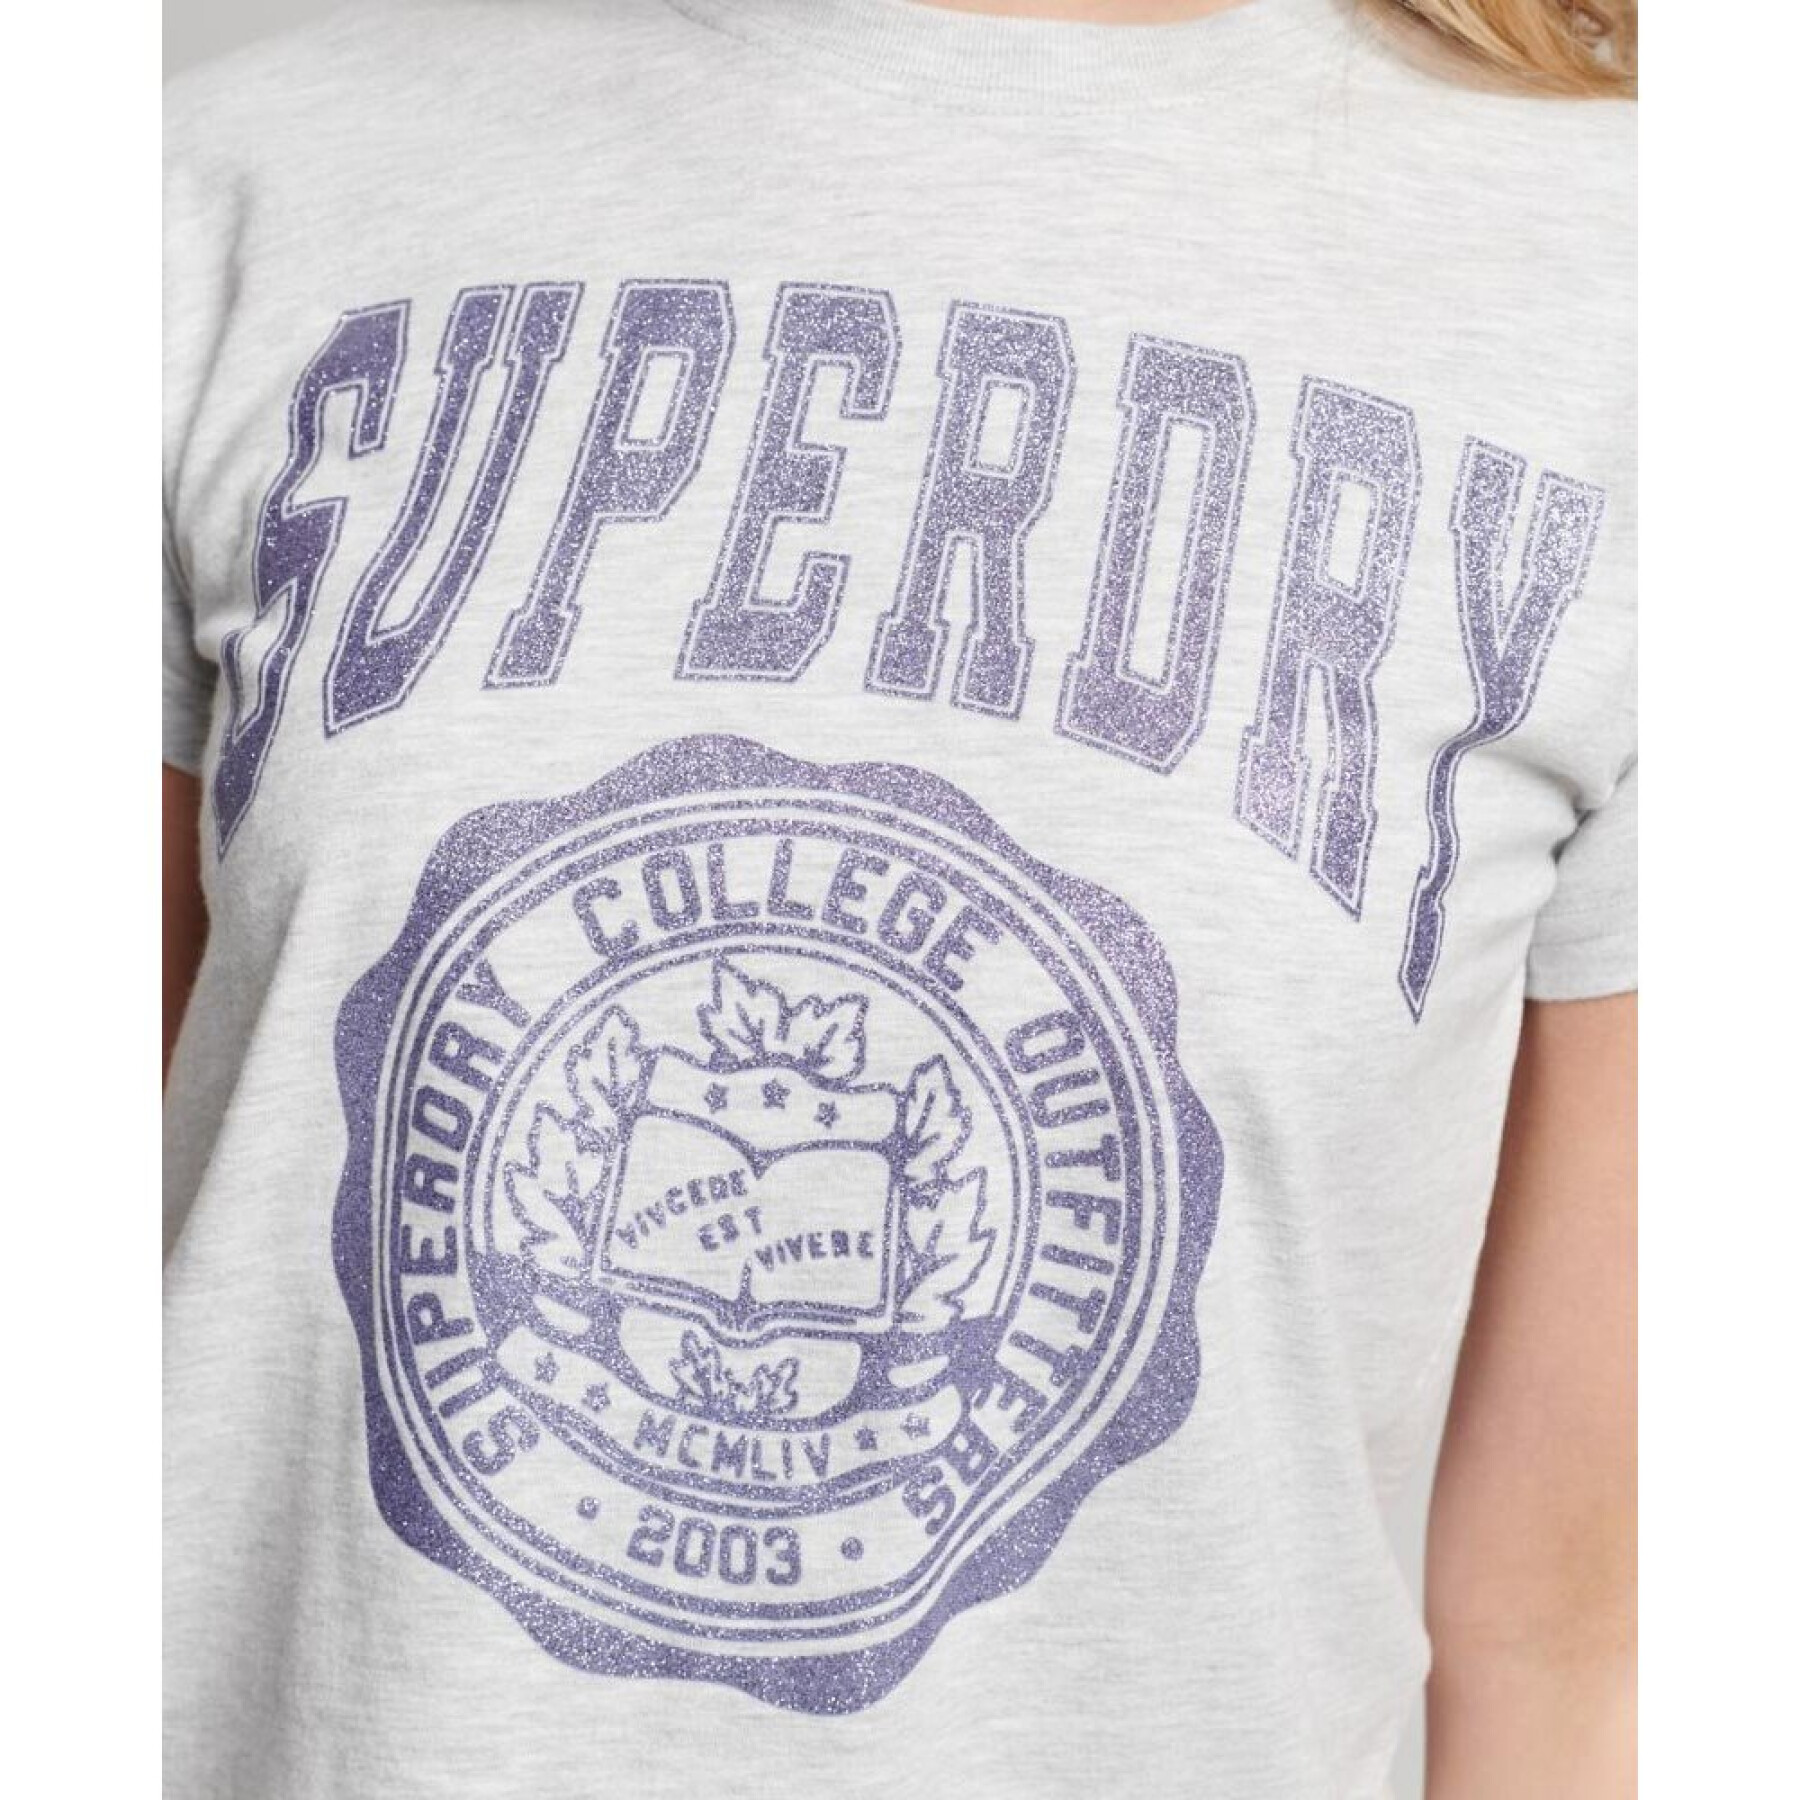 Women's T-shirt Superdry Collegiate